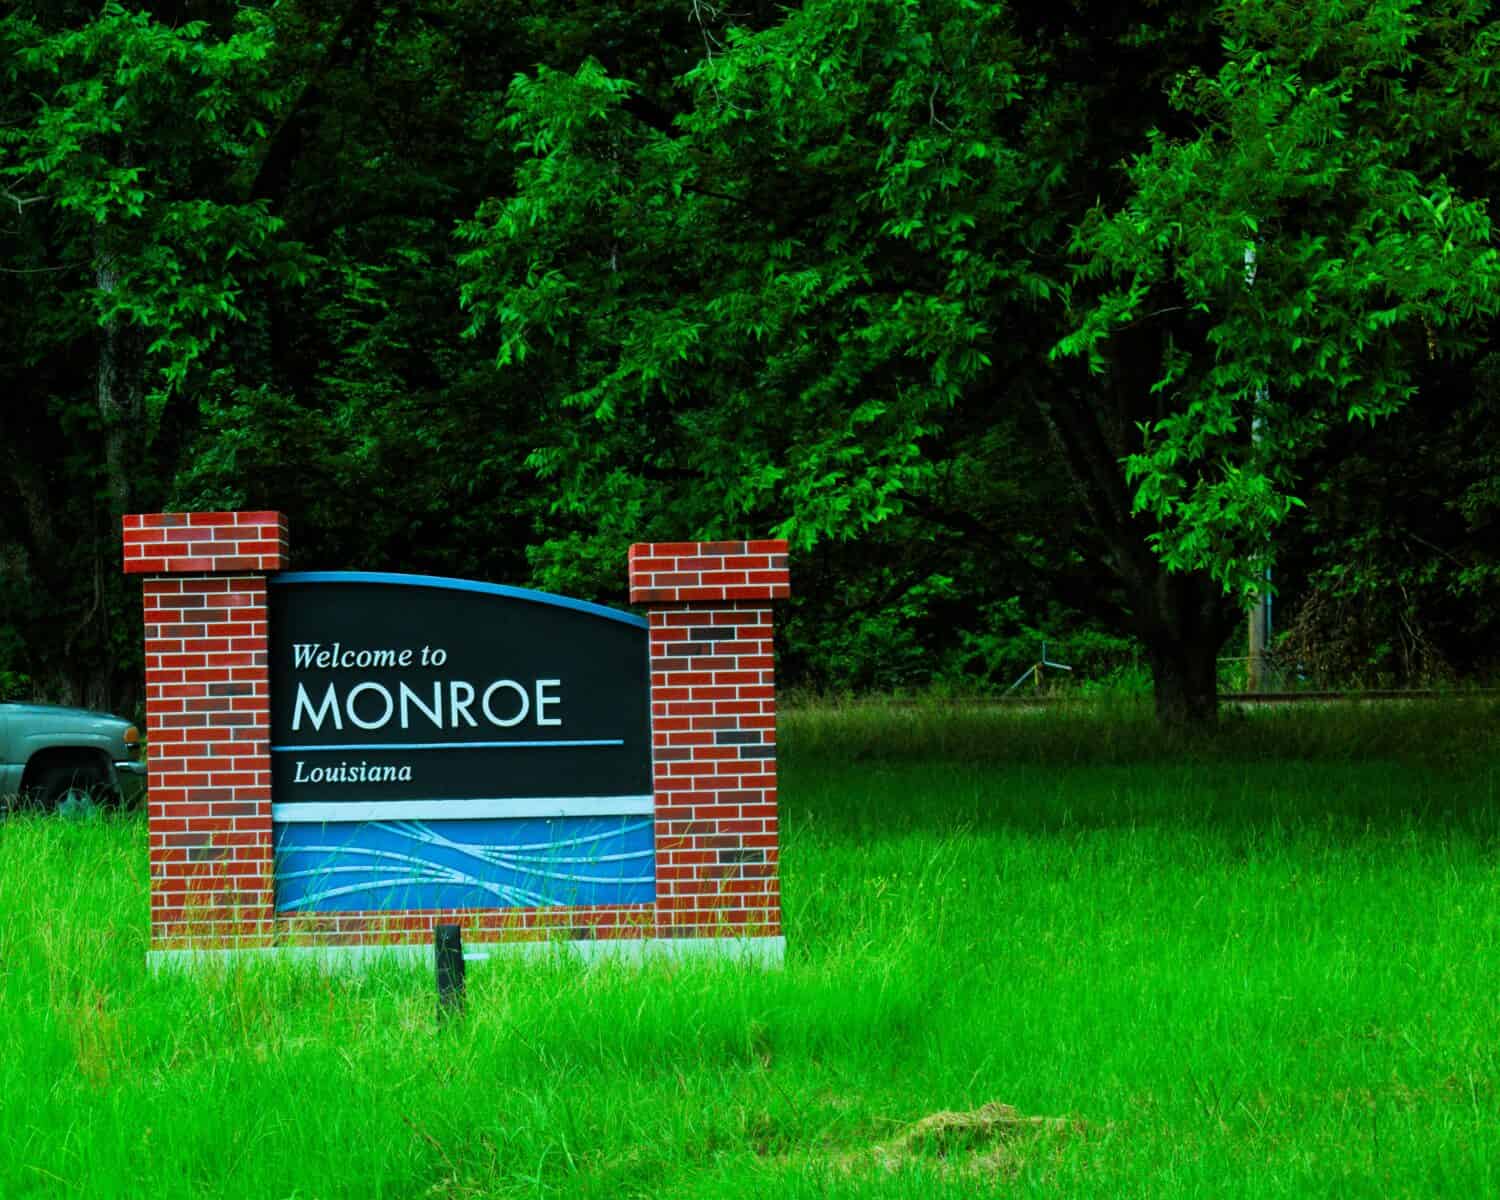 Welcome to Monroe Louisiana sign